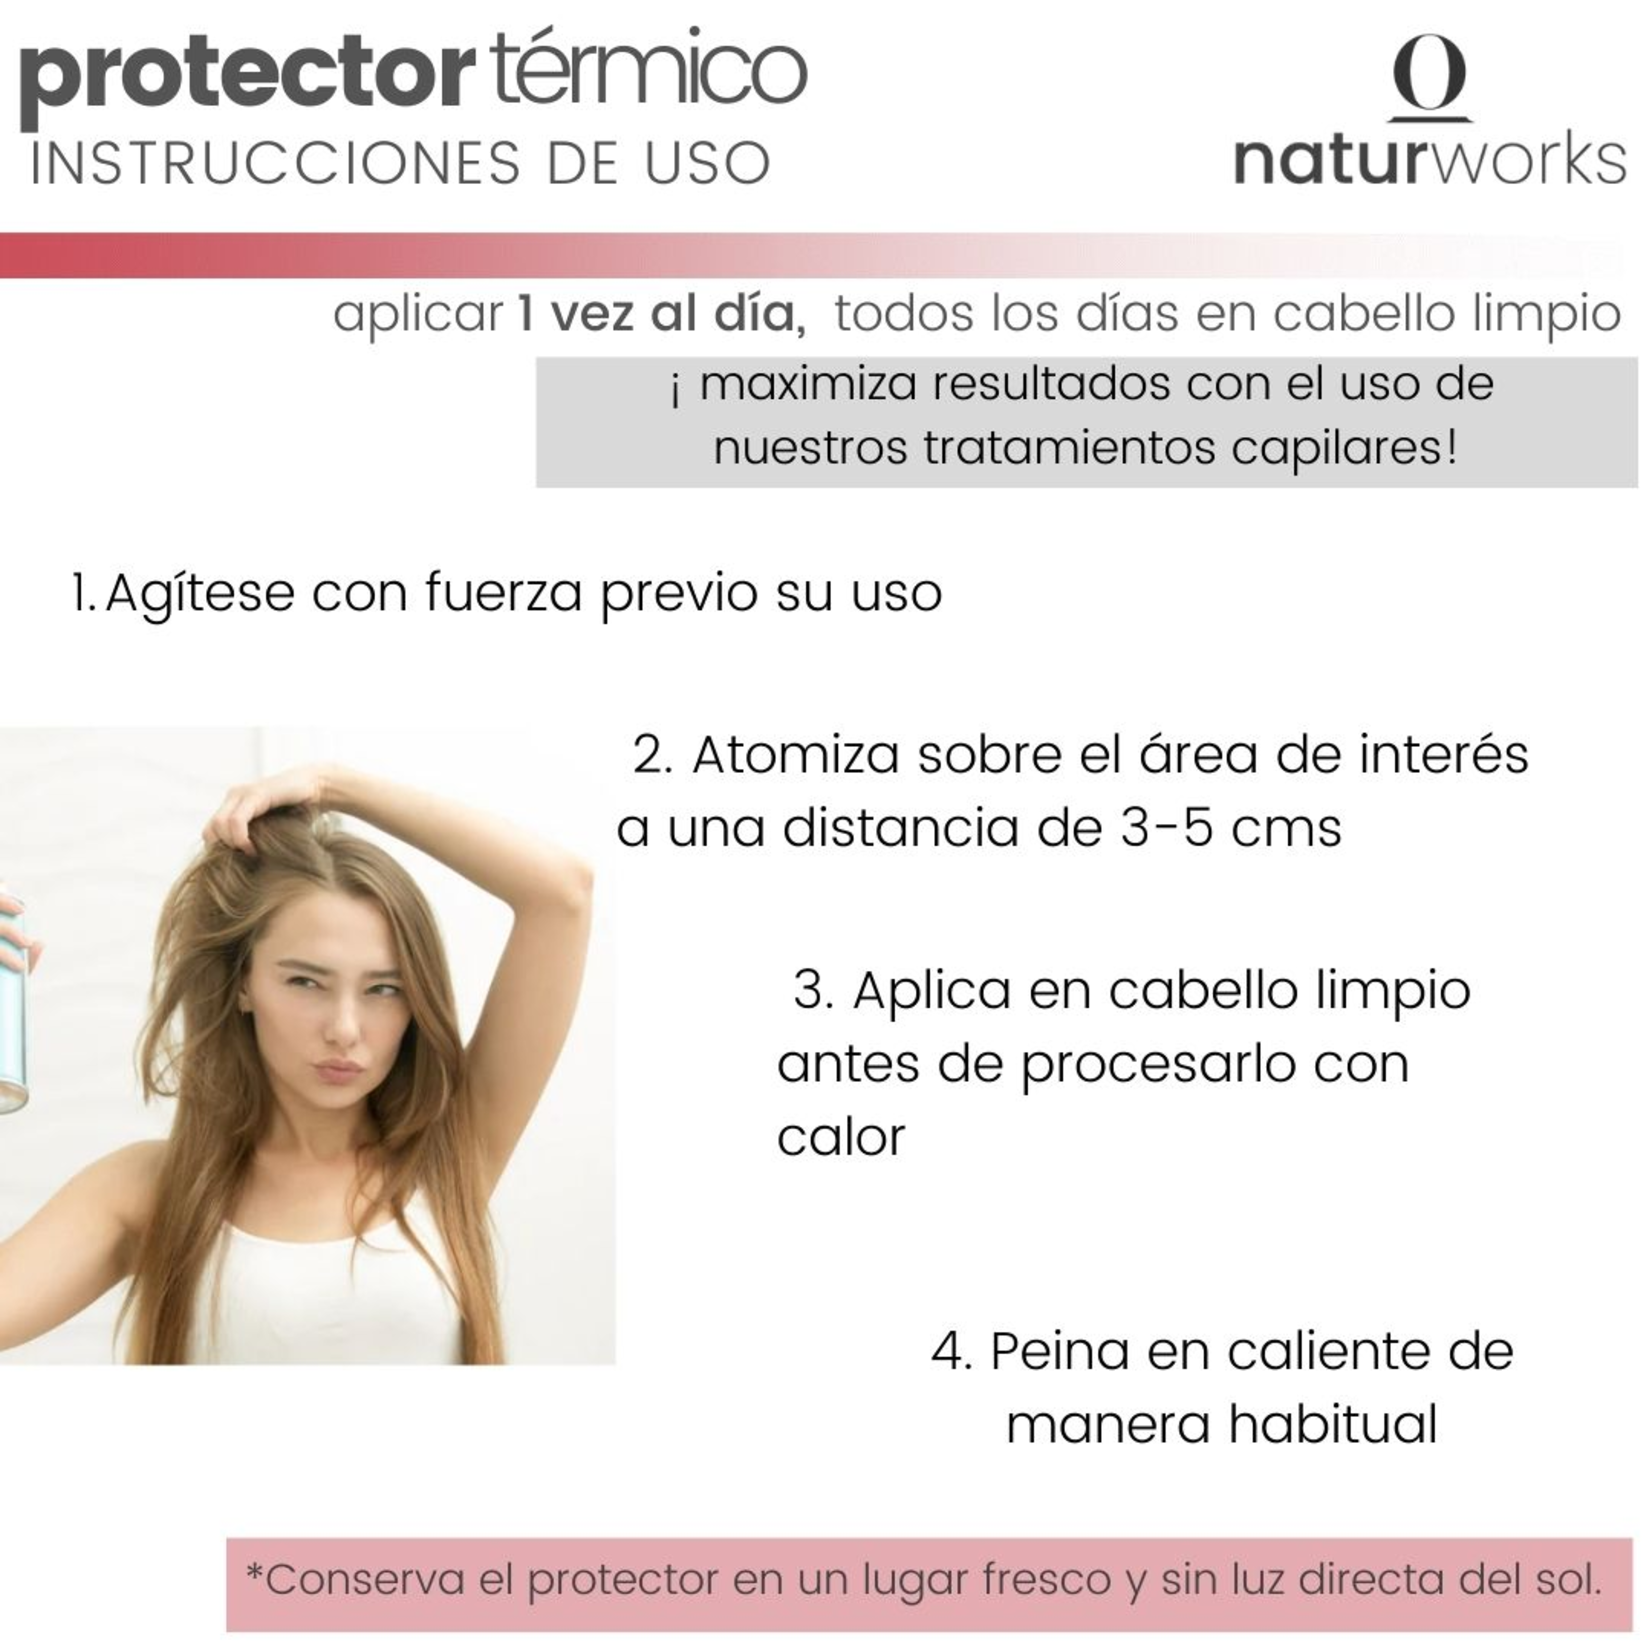 Naturworks Protector termico Naturworks con pro vitamina B5 120 ml